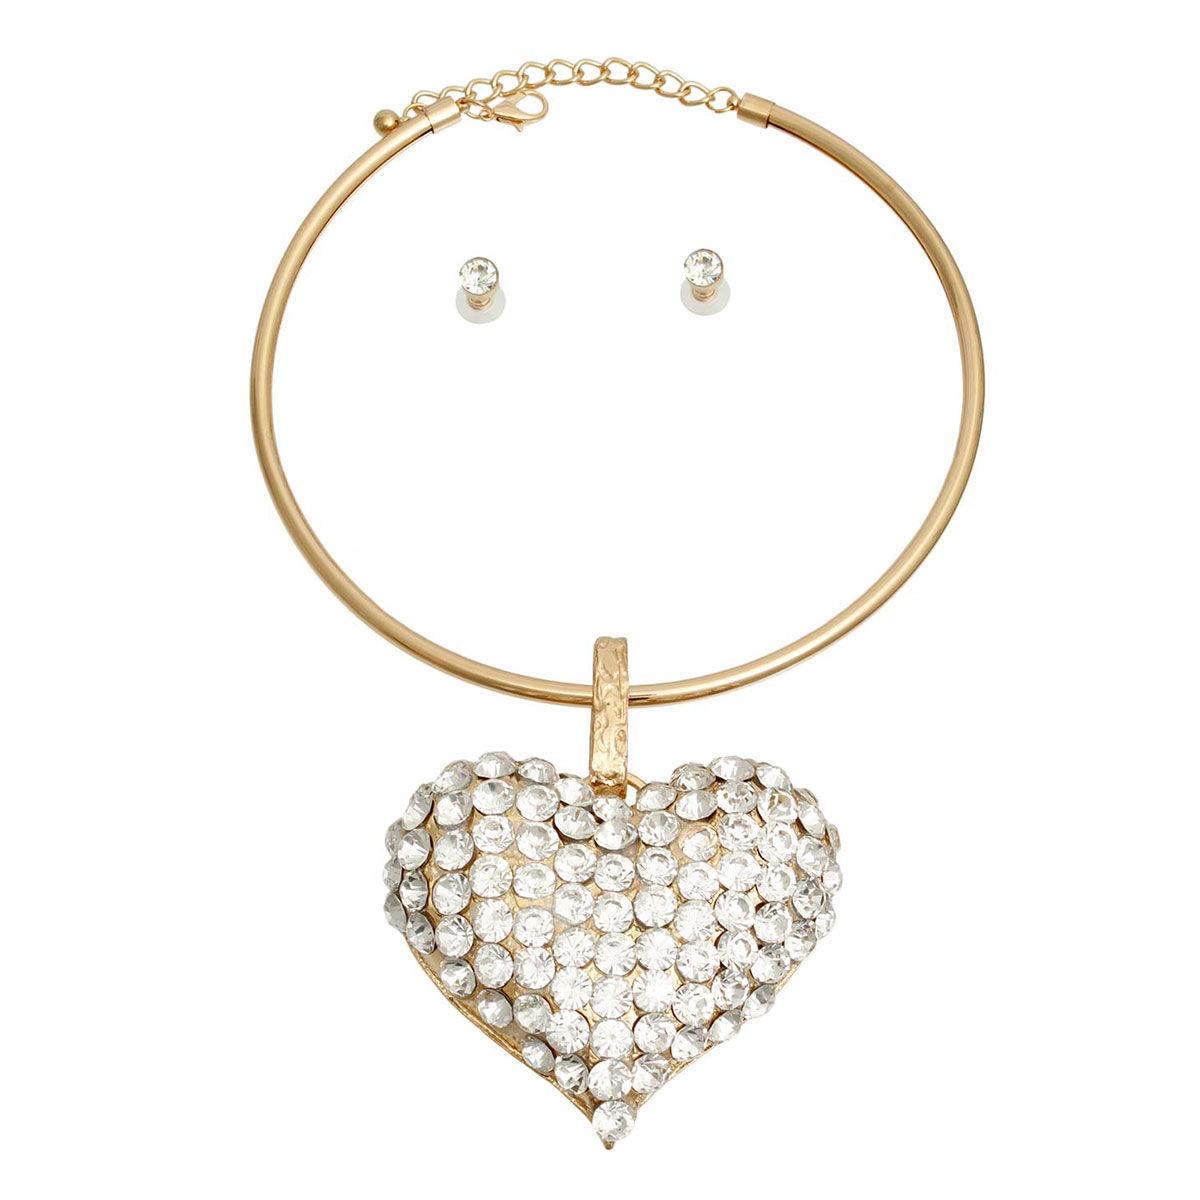 Extra Stunning: Gold-tone Necklace with Rhinestone Heart Set